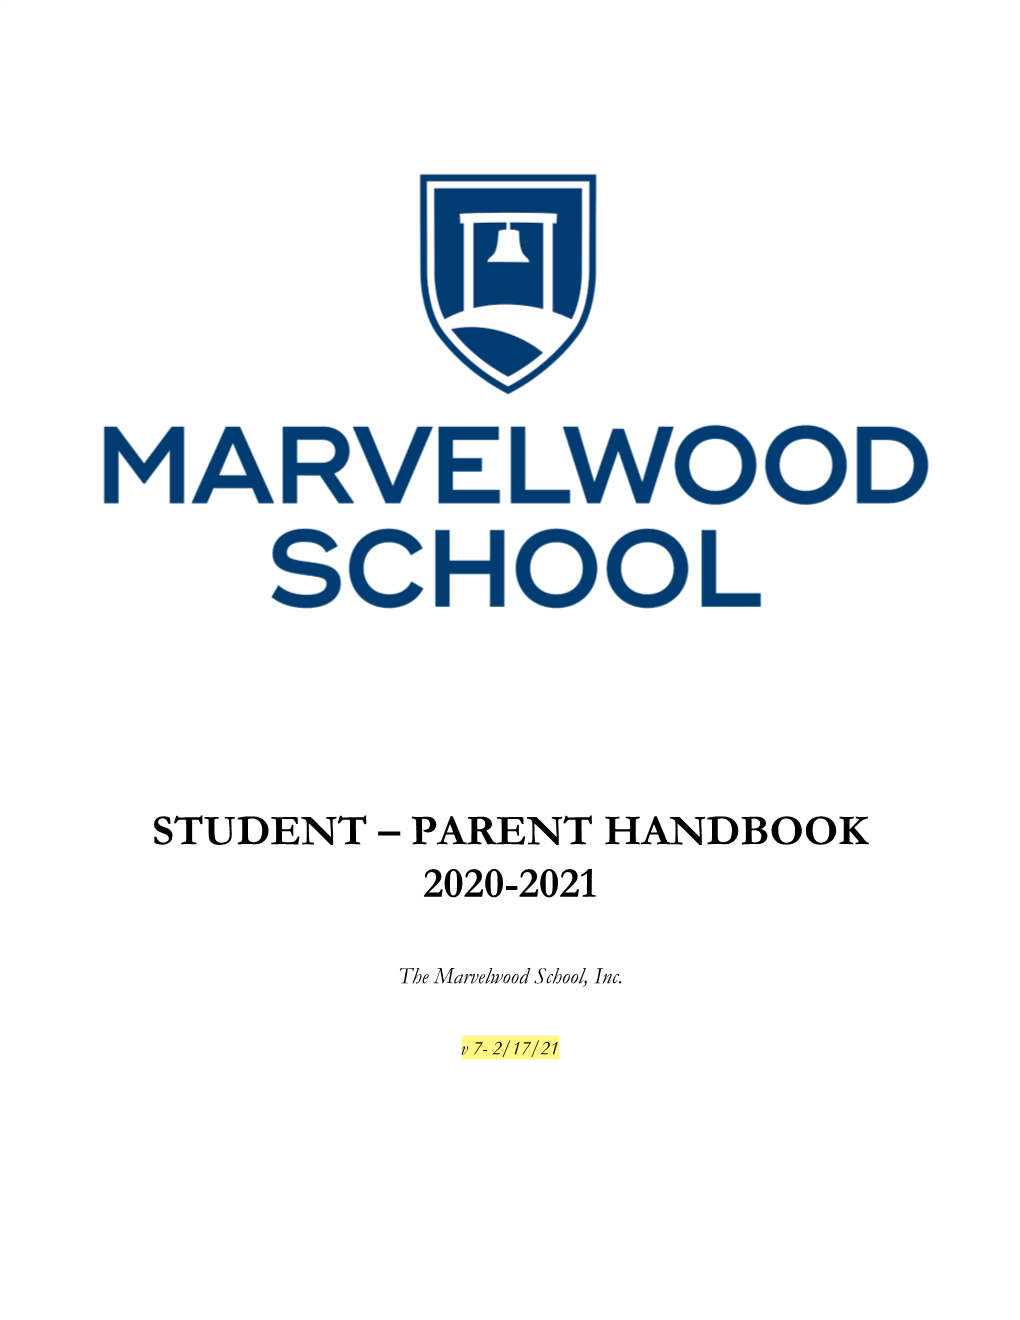 Student – Parent Handbook 2020-2021